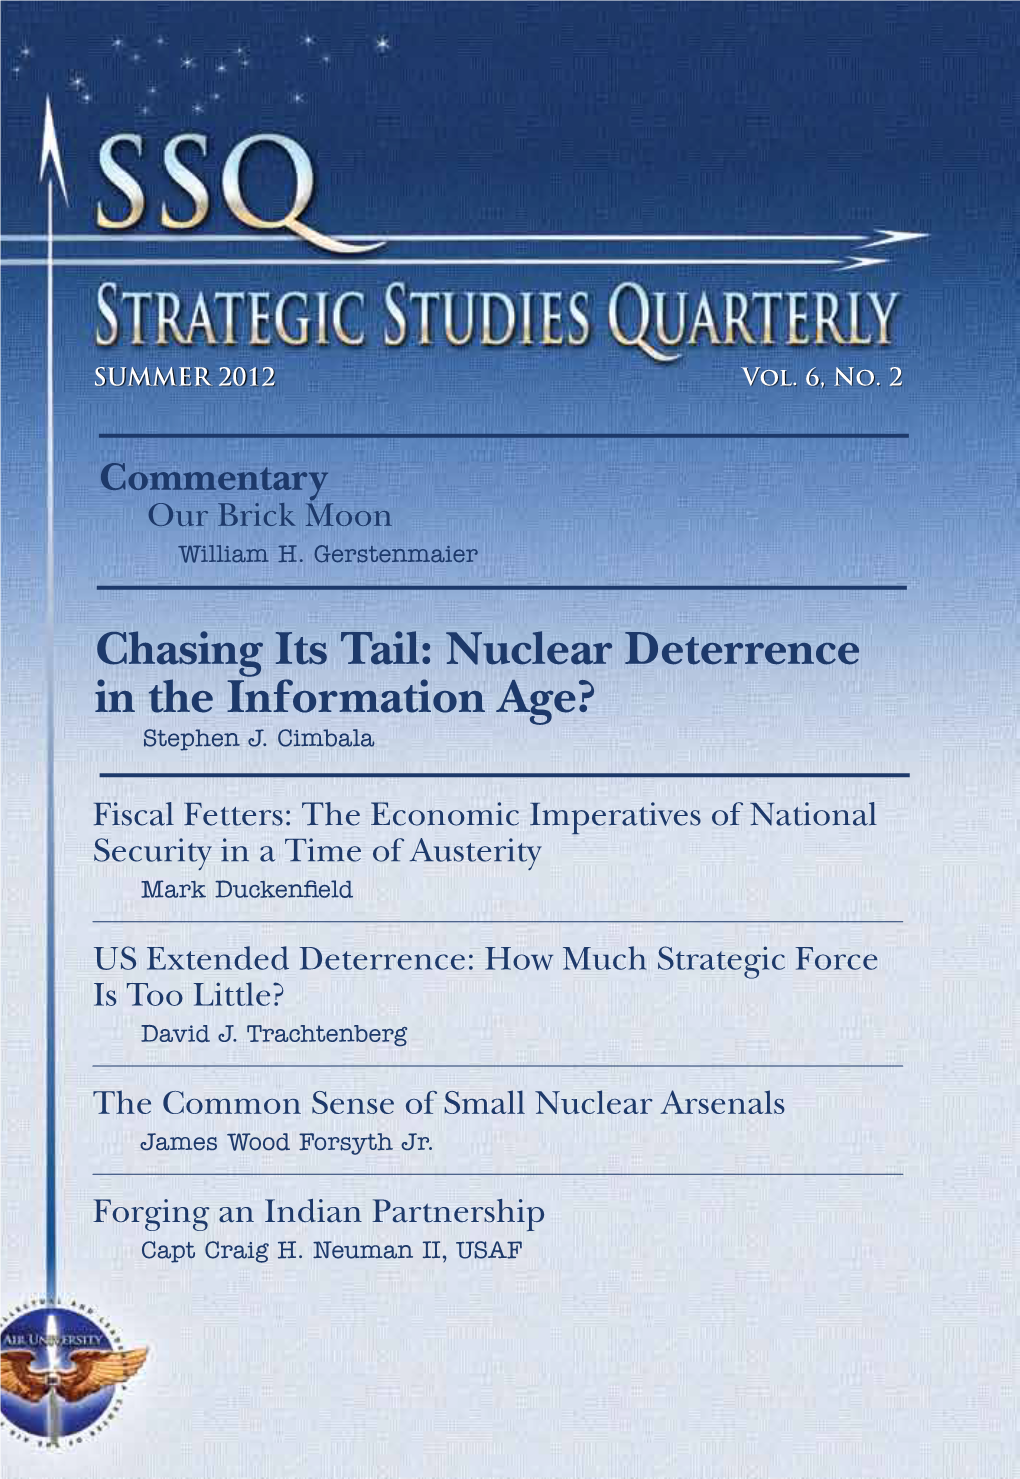 Strategic Studies Quarterly Vol 6, No 2, Summer 2012